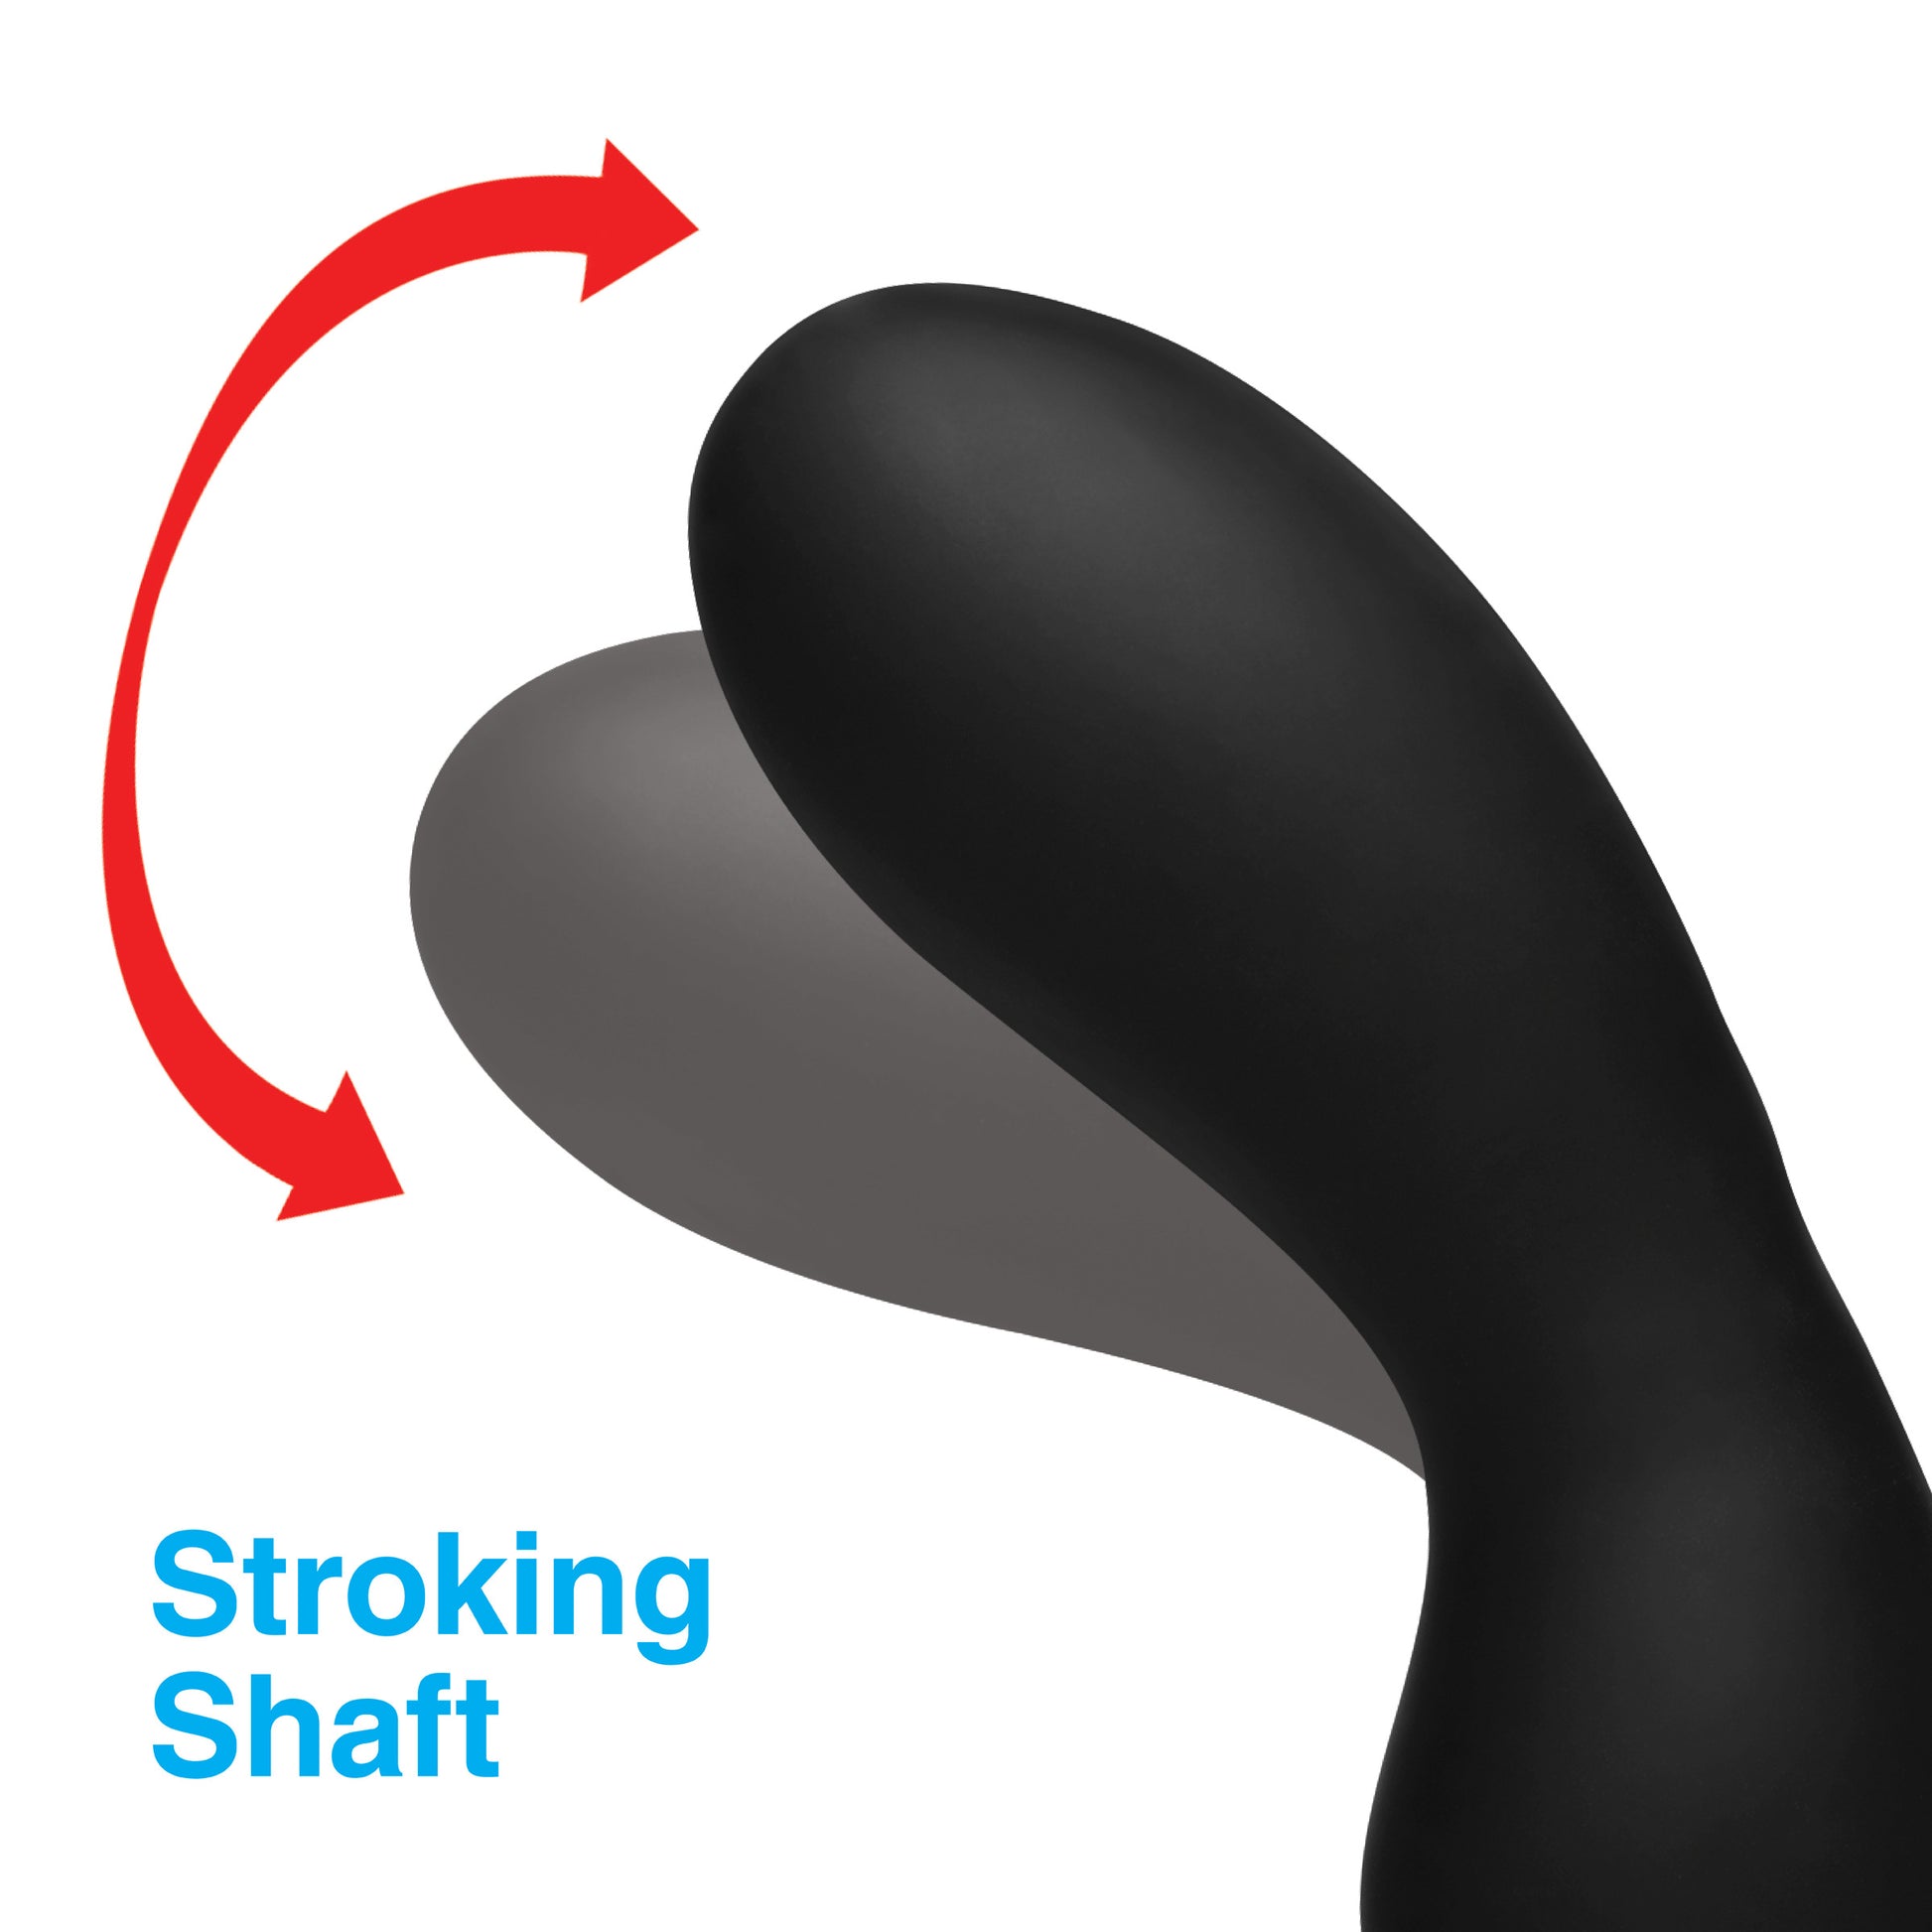 7X P-Stroke Silicone Prostate Stimulator with Stroking Shaft - UABDSM